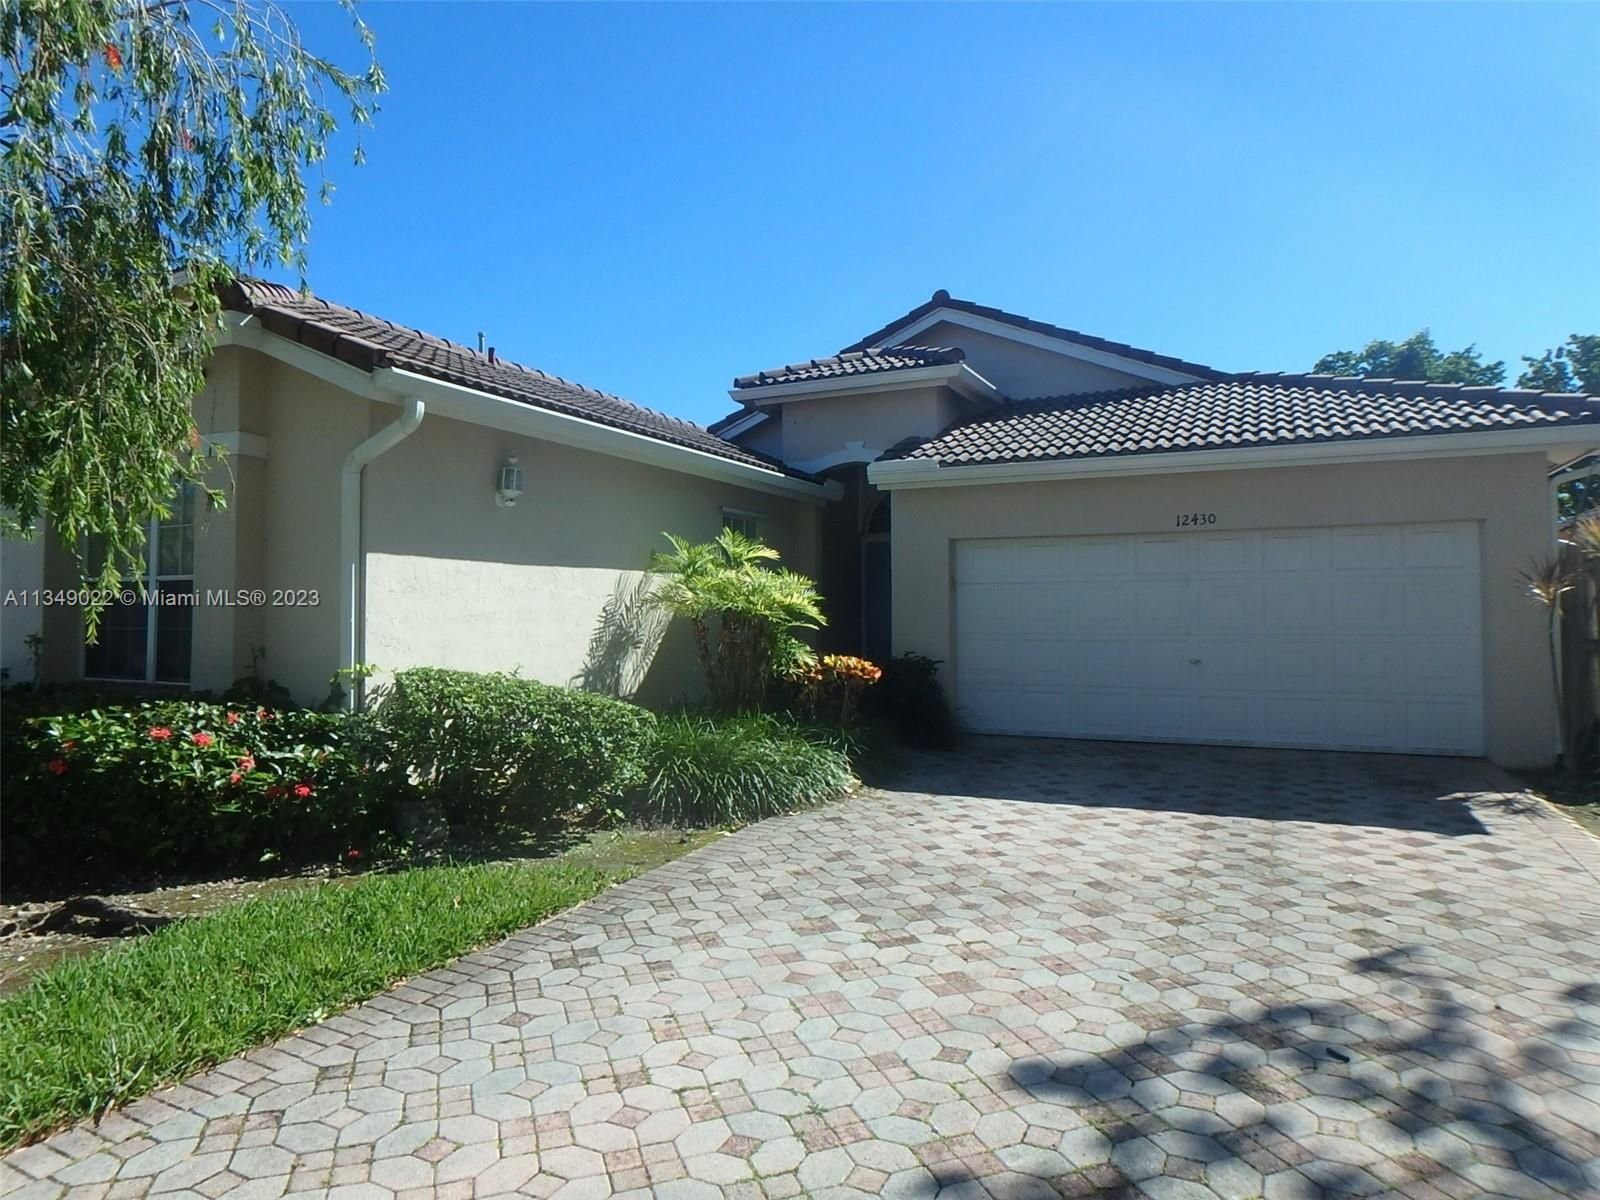 Real estate property located at 12430 143rd Ln, Miami-Dade County, Miami, FL